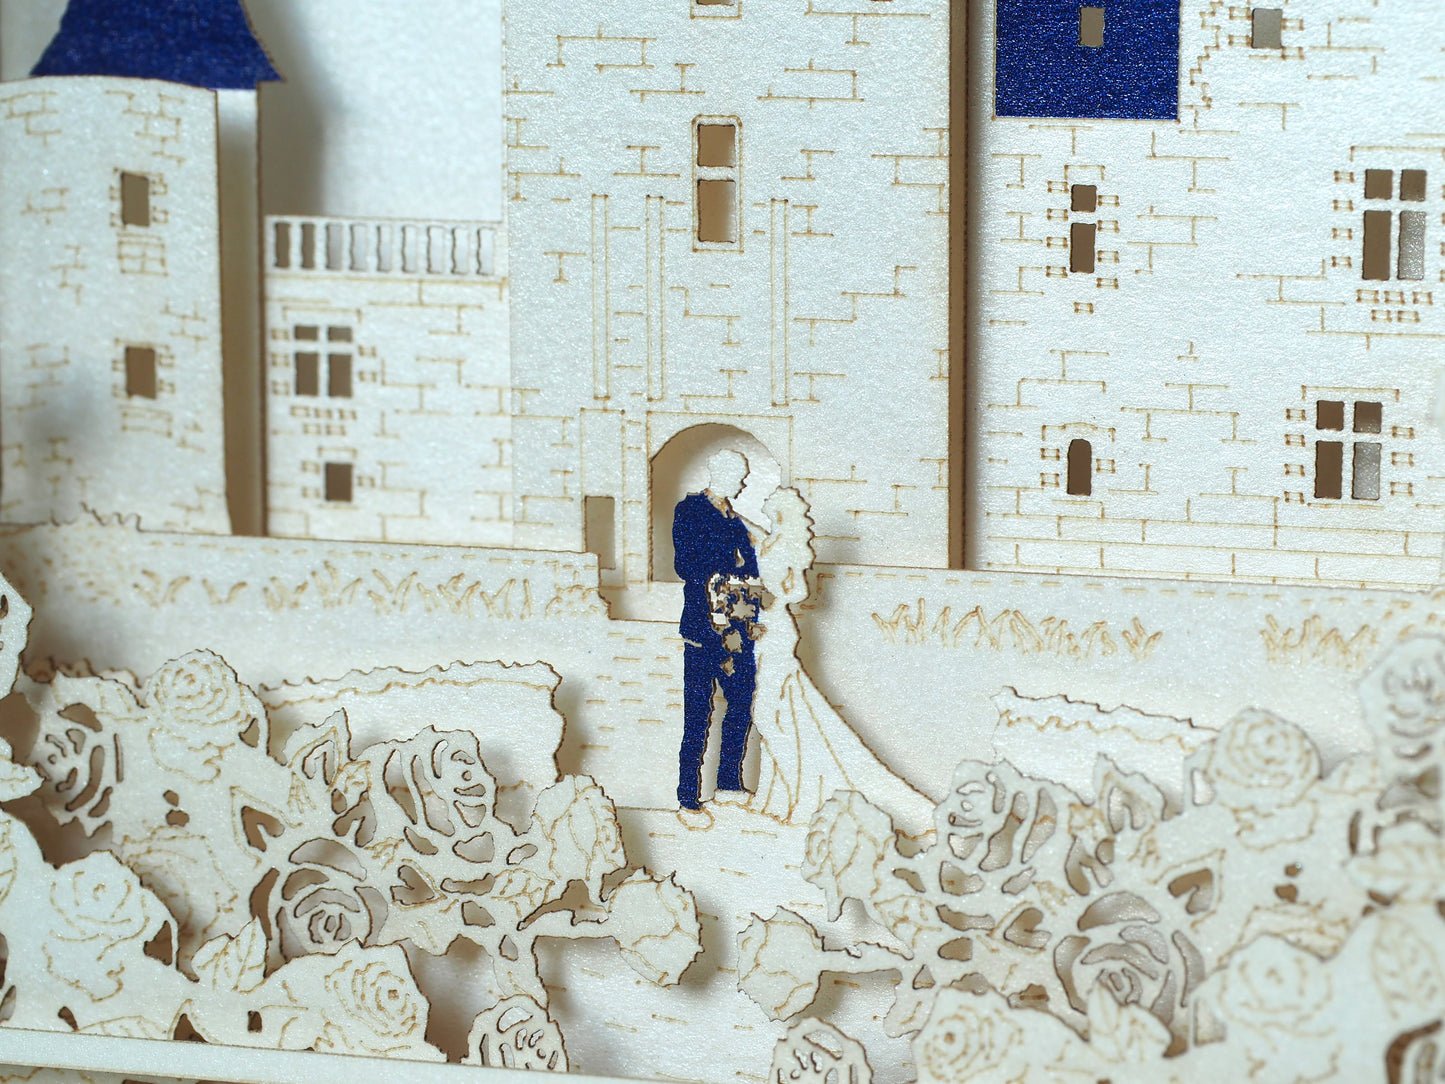 Château du Rivau castle-palace in Lémeré France. Wedding invitation card, RSVP inserts. Paper pop up cards